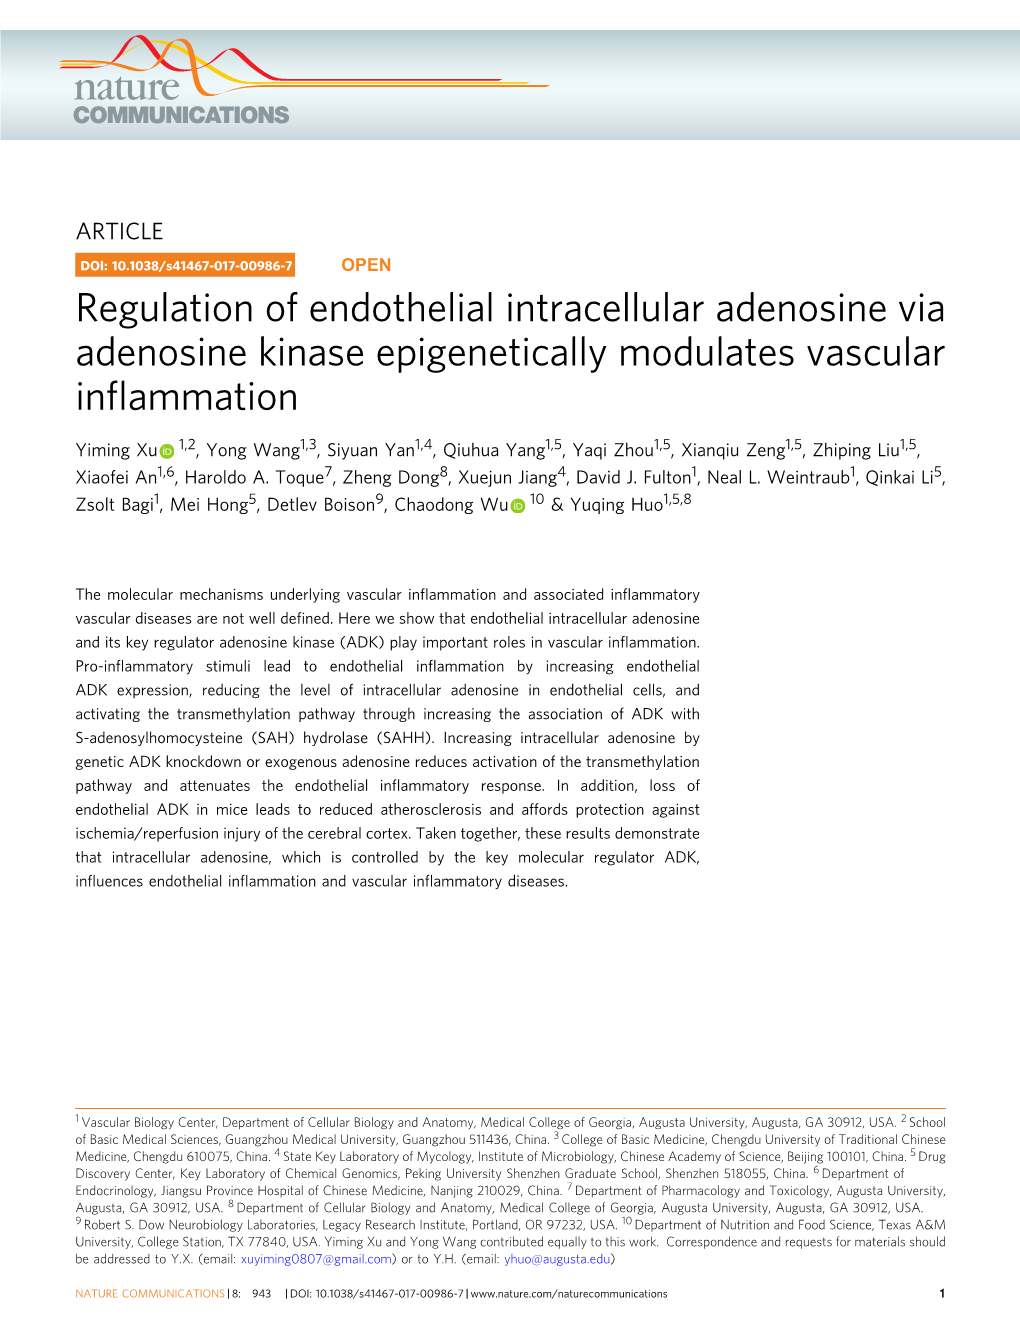 Regulation of Endothelial Intracellular Adenosine Via Adenosine Kinase Epigenetically Modulates Vascular Inﬂammation